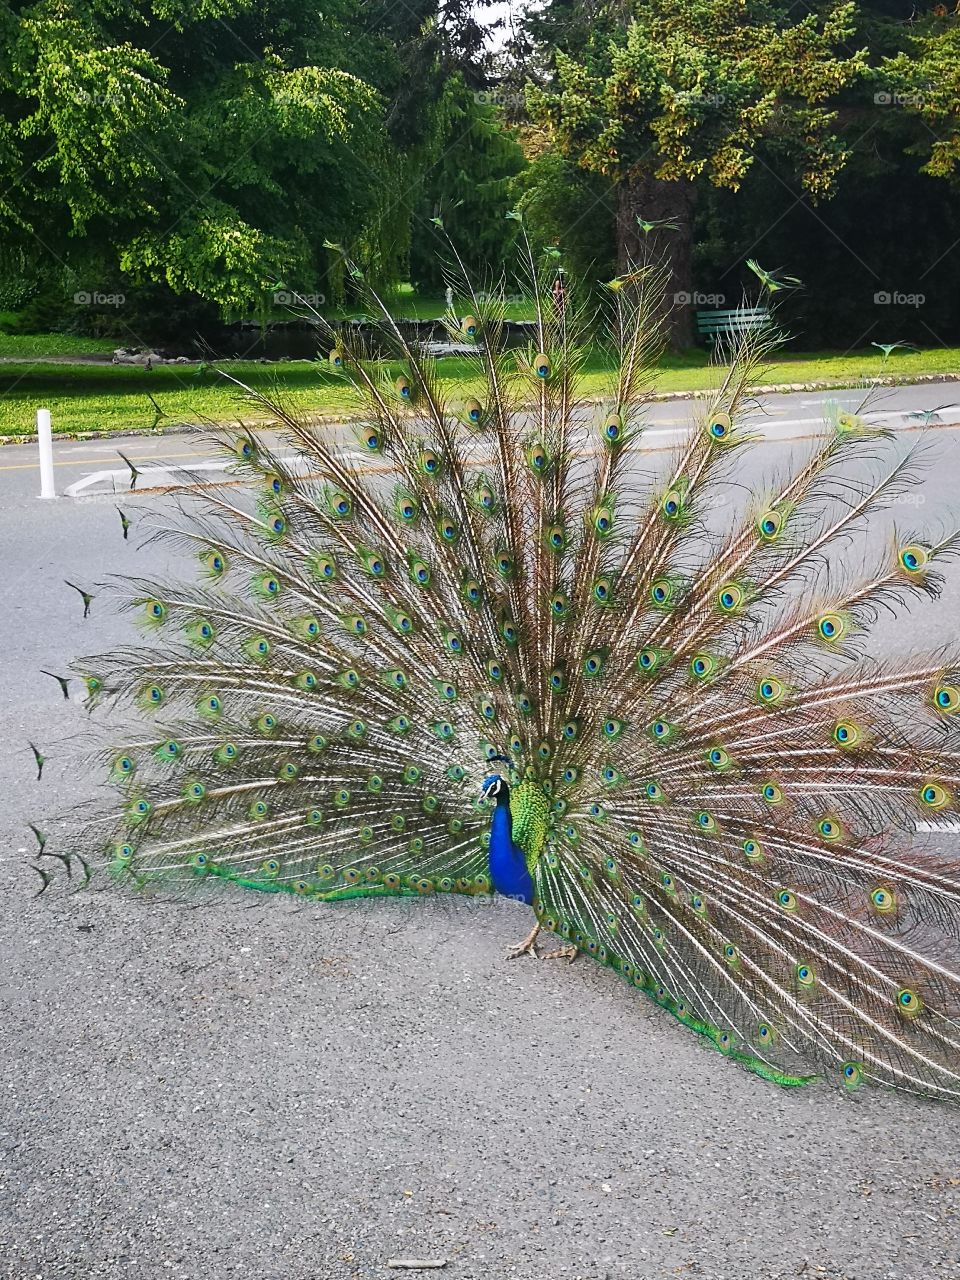 Beacon Hill Park Victoria Canada amaze Peacock in display